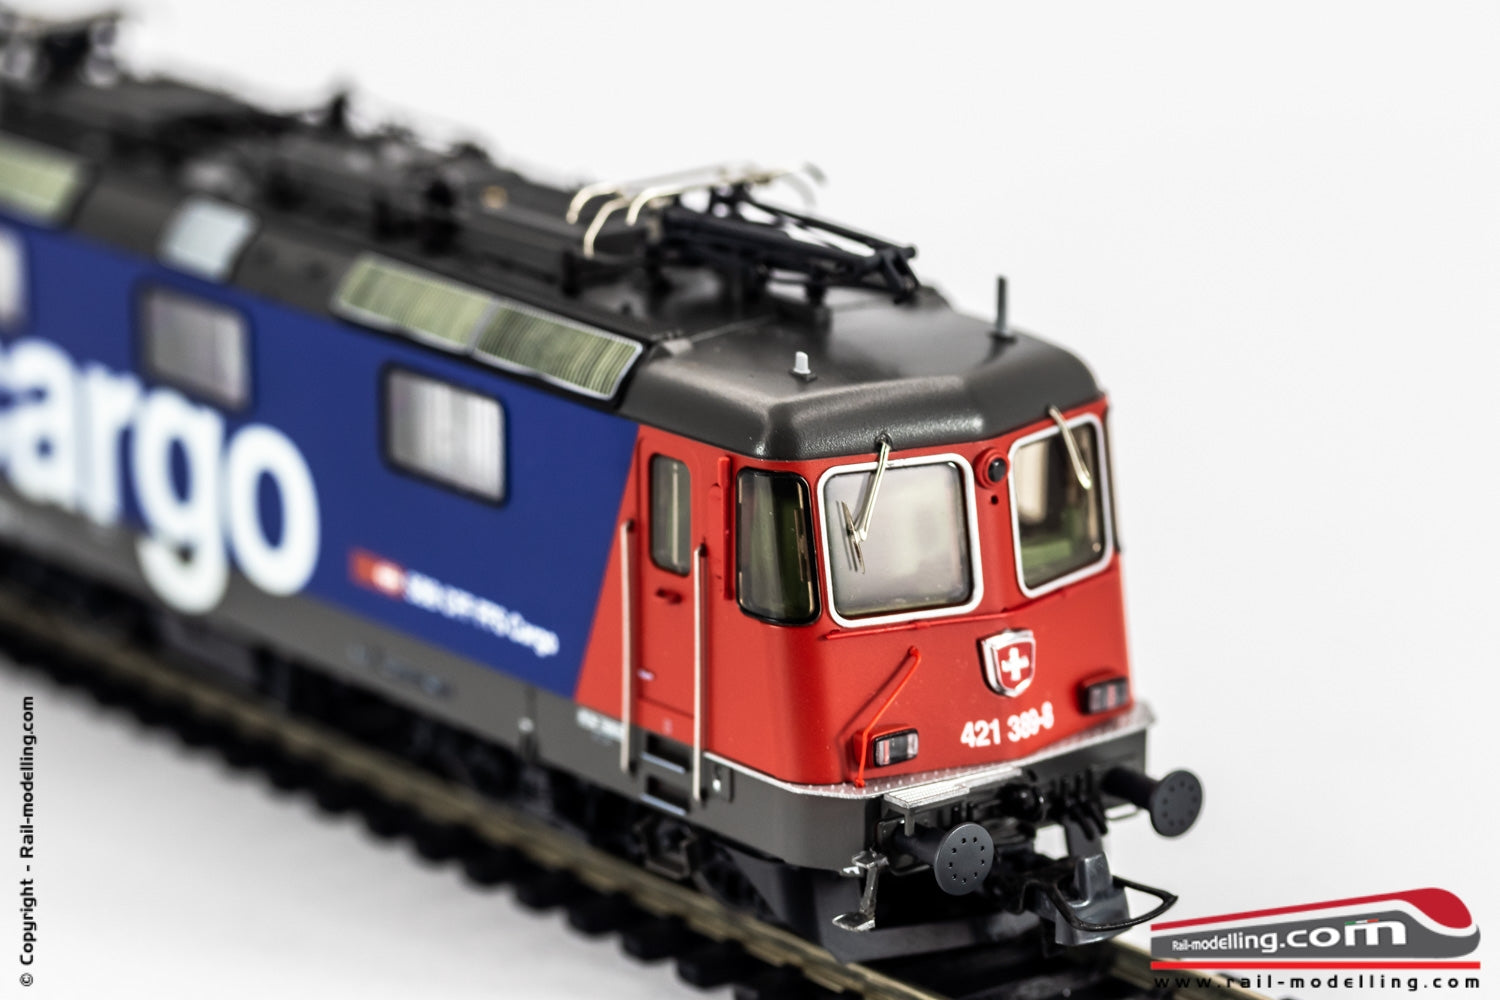 ROCO 73256 - H0 1:87 - Locomotiva elettrica SBB CFF FFS Re 421 389-8 livrea CARGO Ep. VI